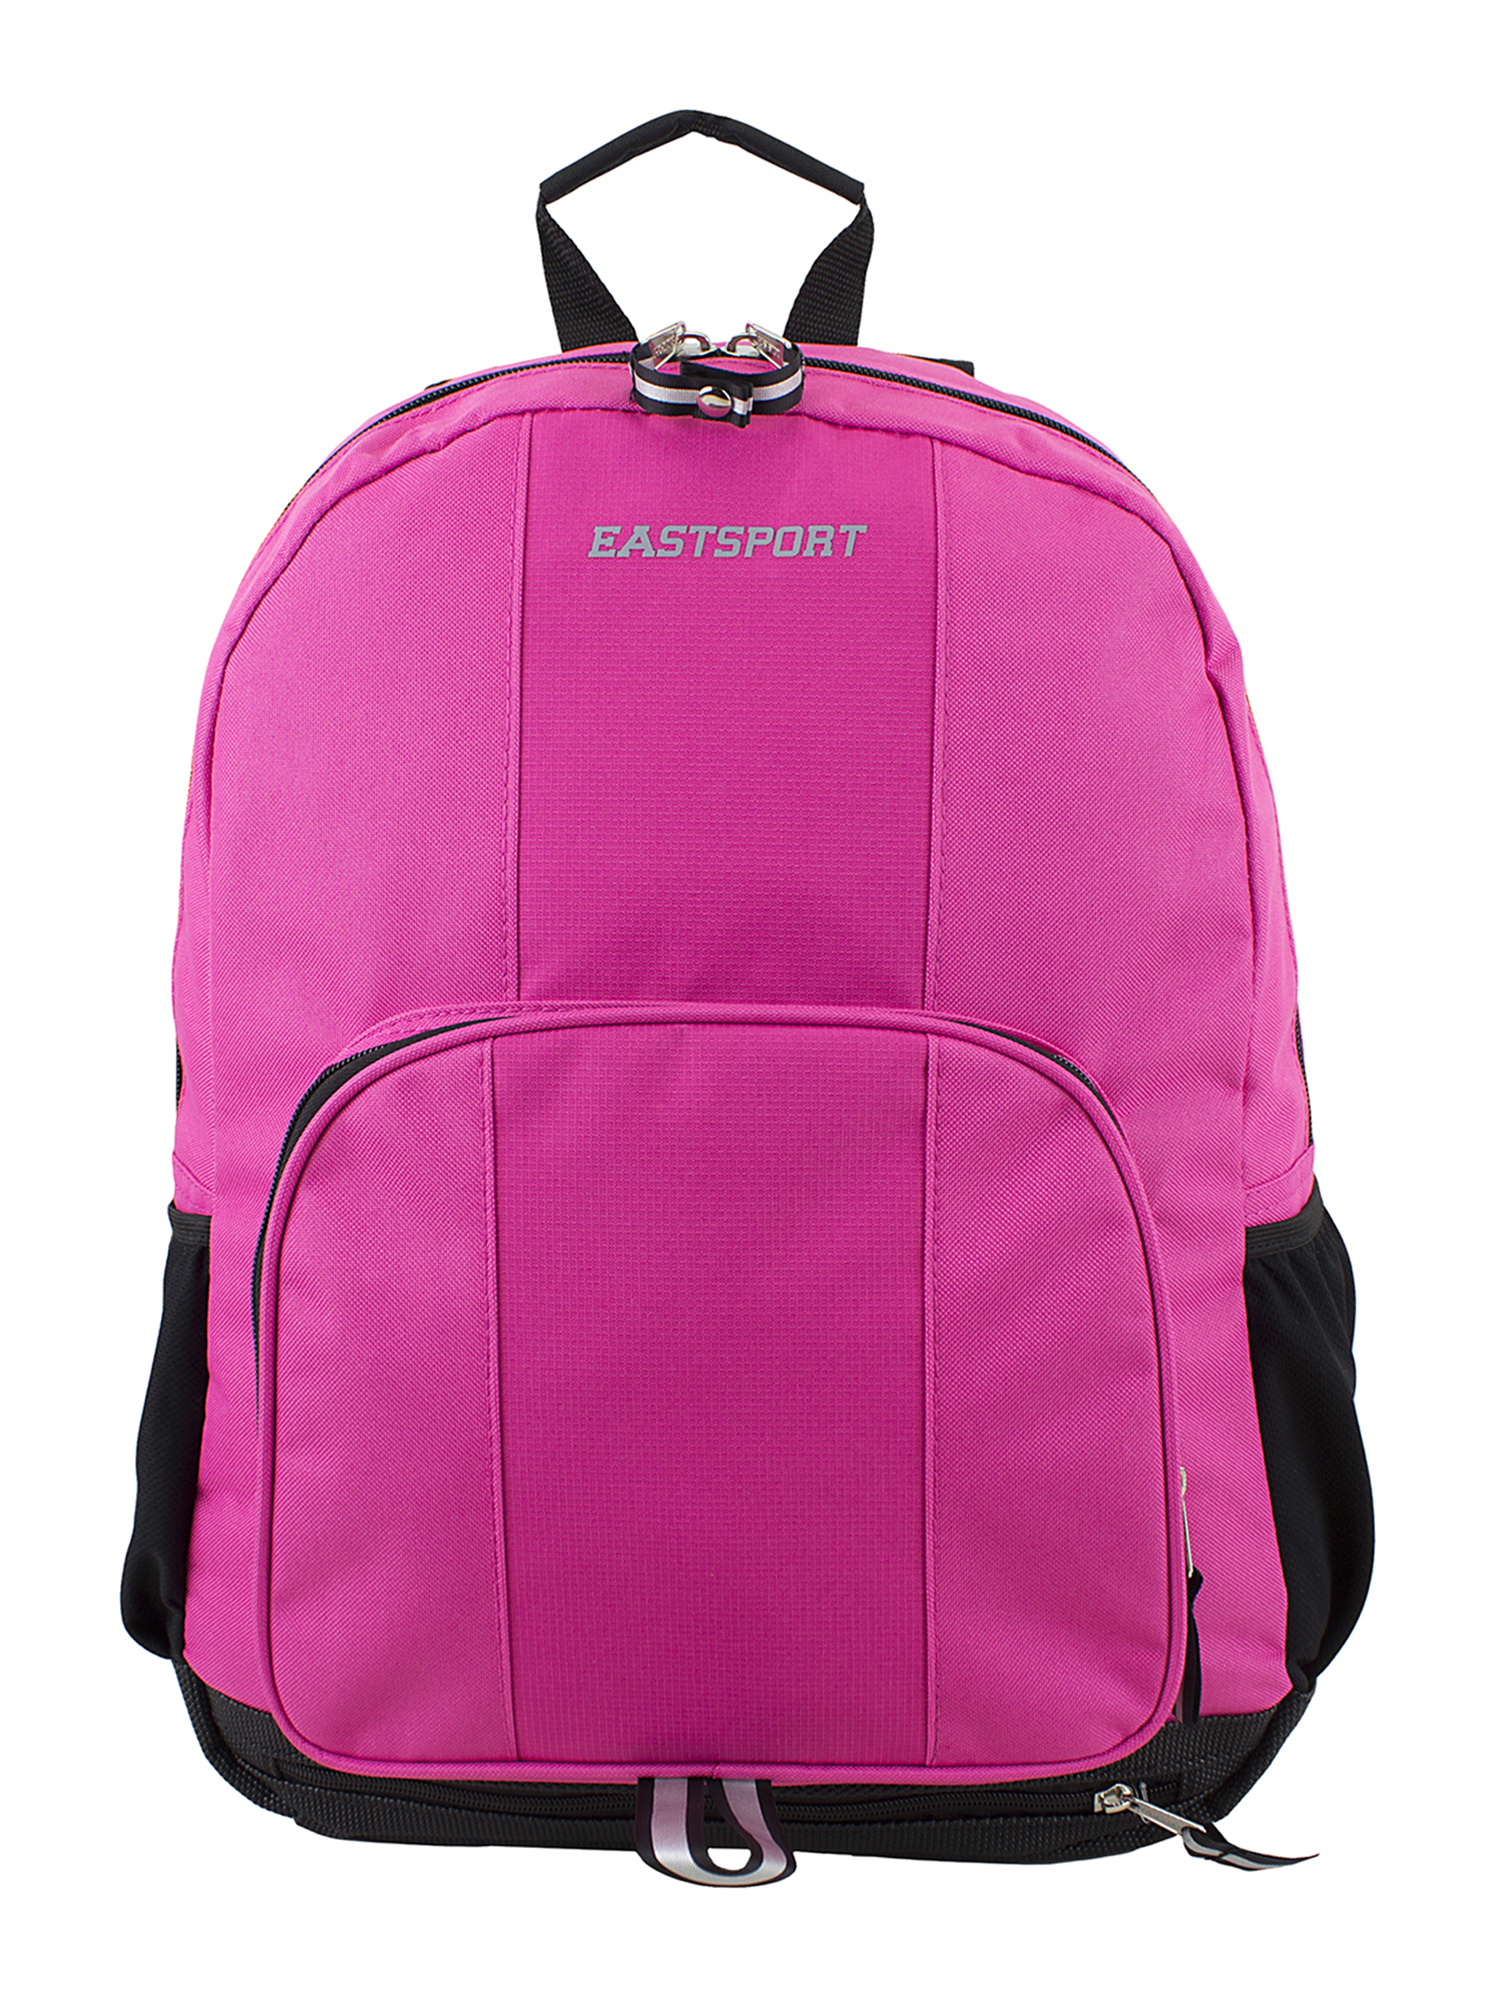 Eastsport Unisex Classic Backpack with Bonus Drawstring Bag Pink - image 2 of 6